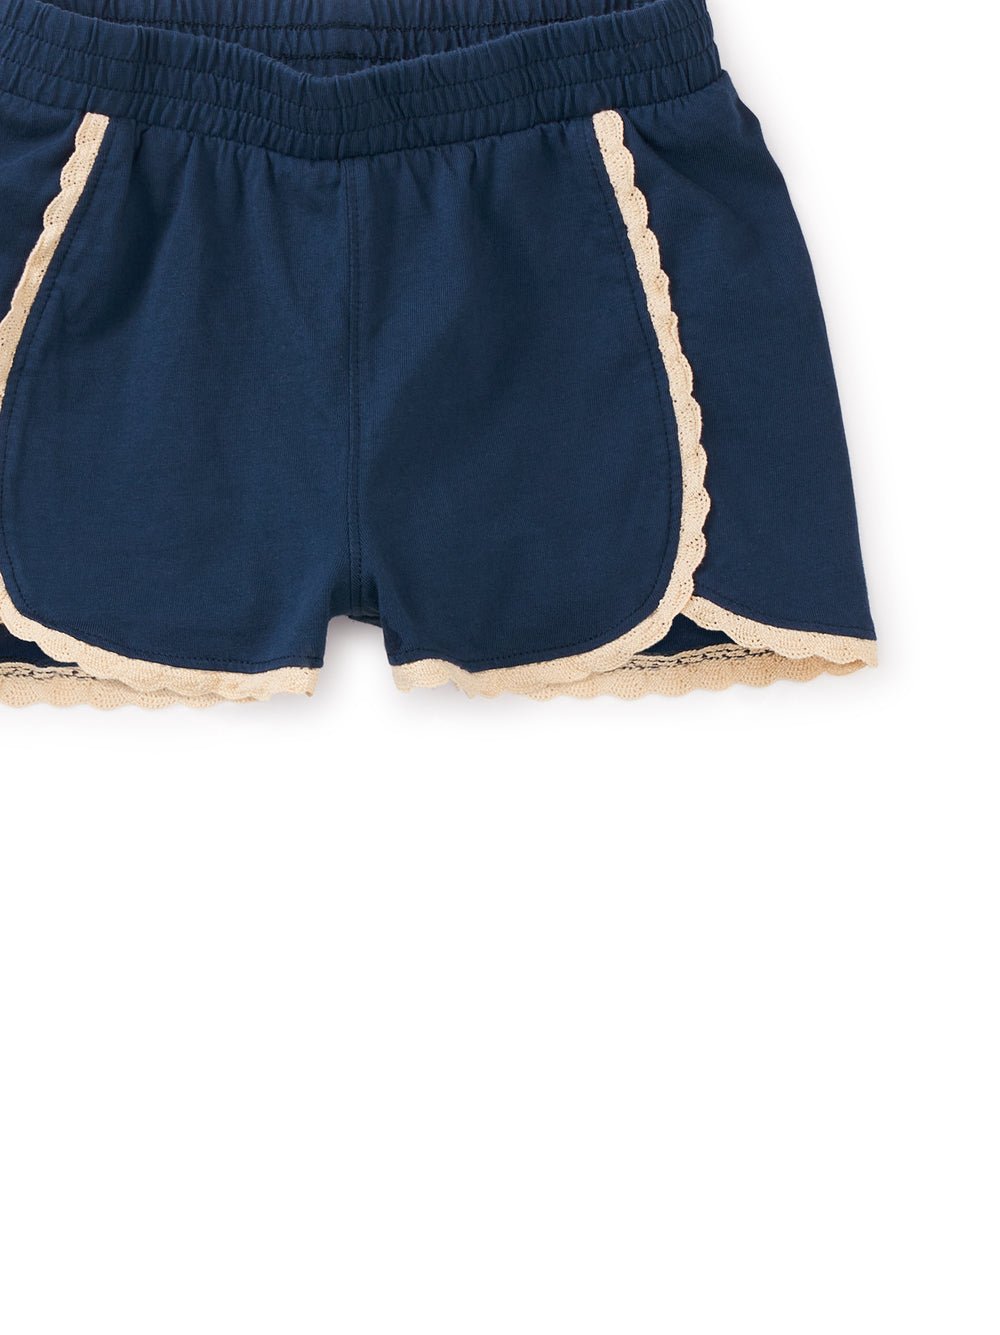 Navy Blue Crochet Trim Shorts